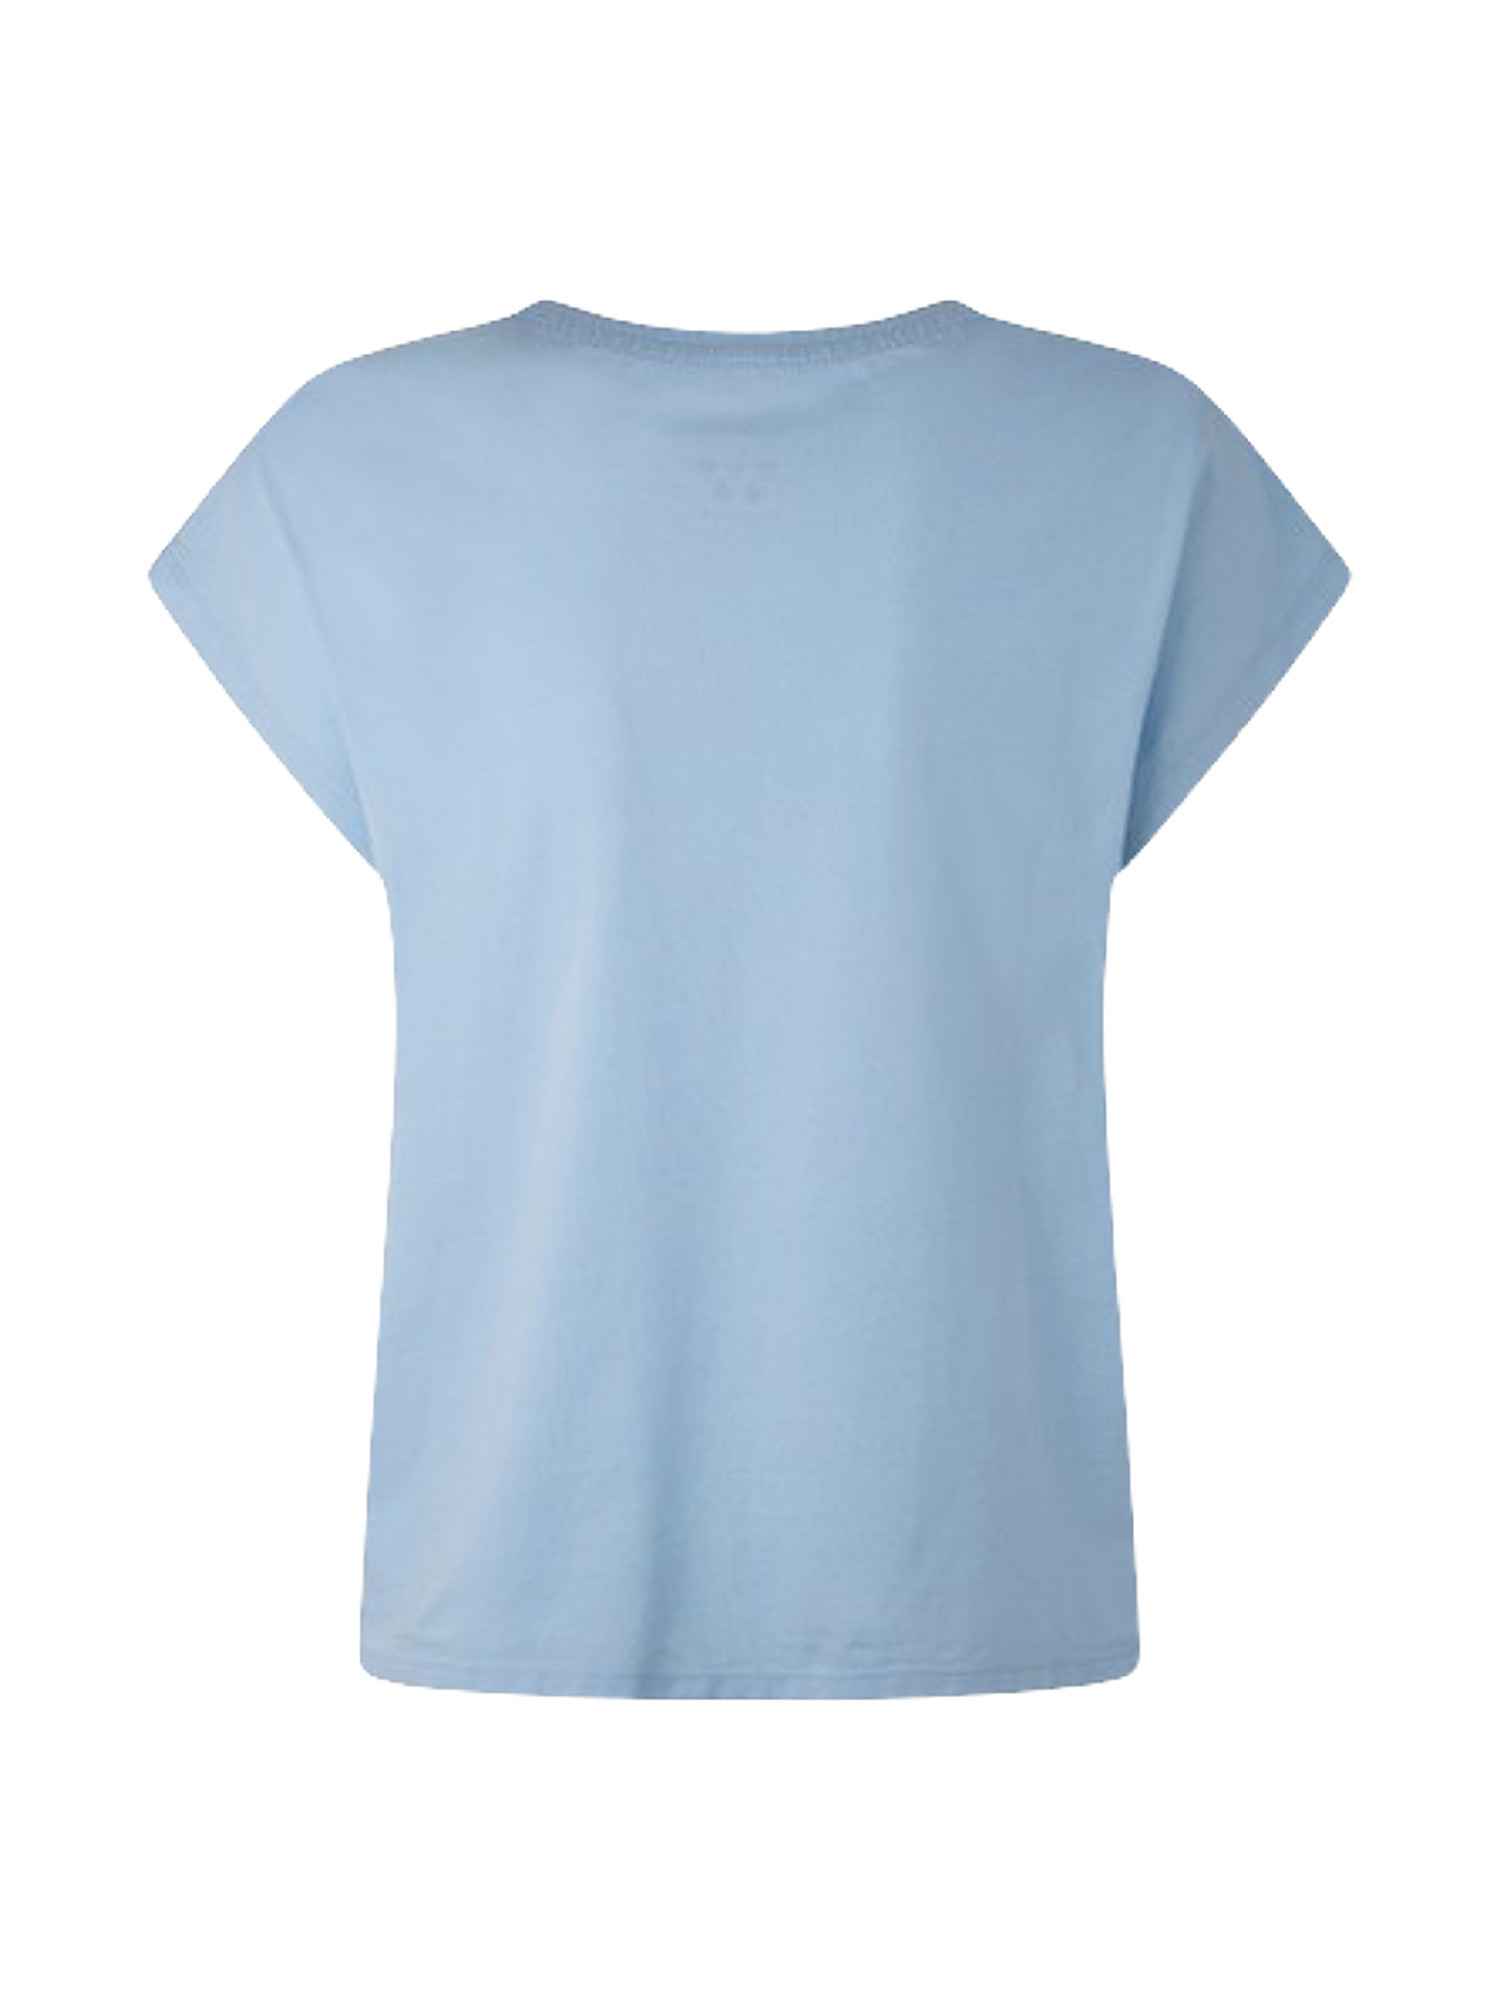 T-shirt con stampa testo effetto consumato rosie, Azzurro, large image number 1